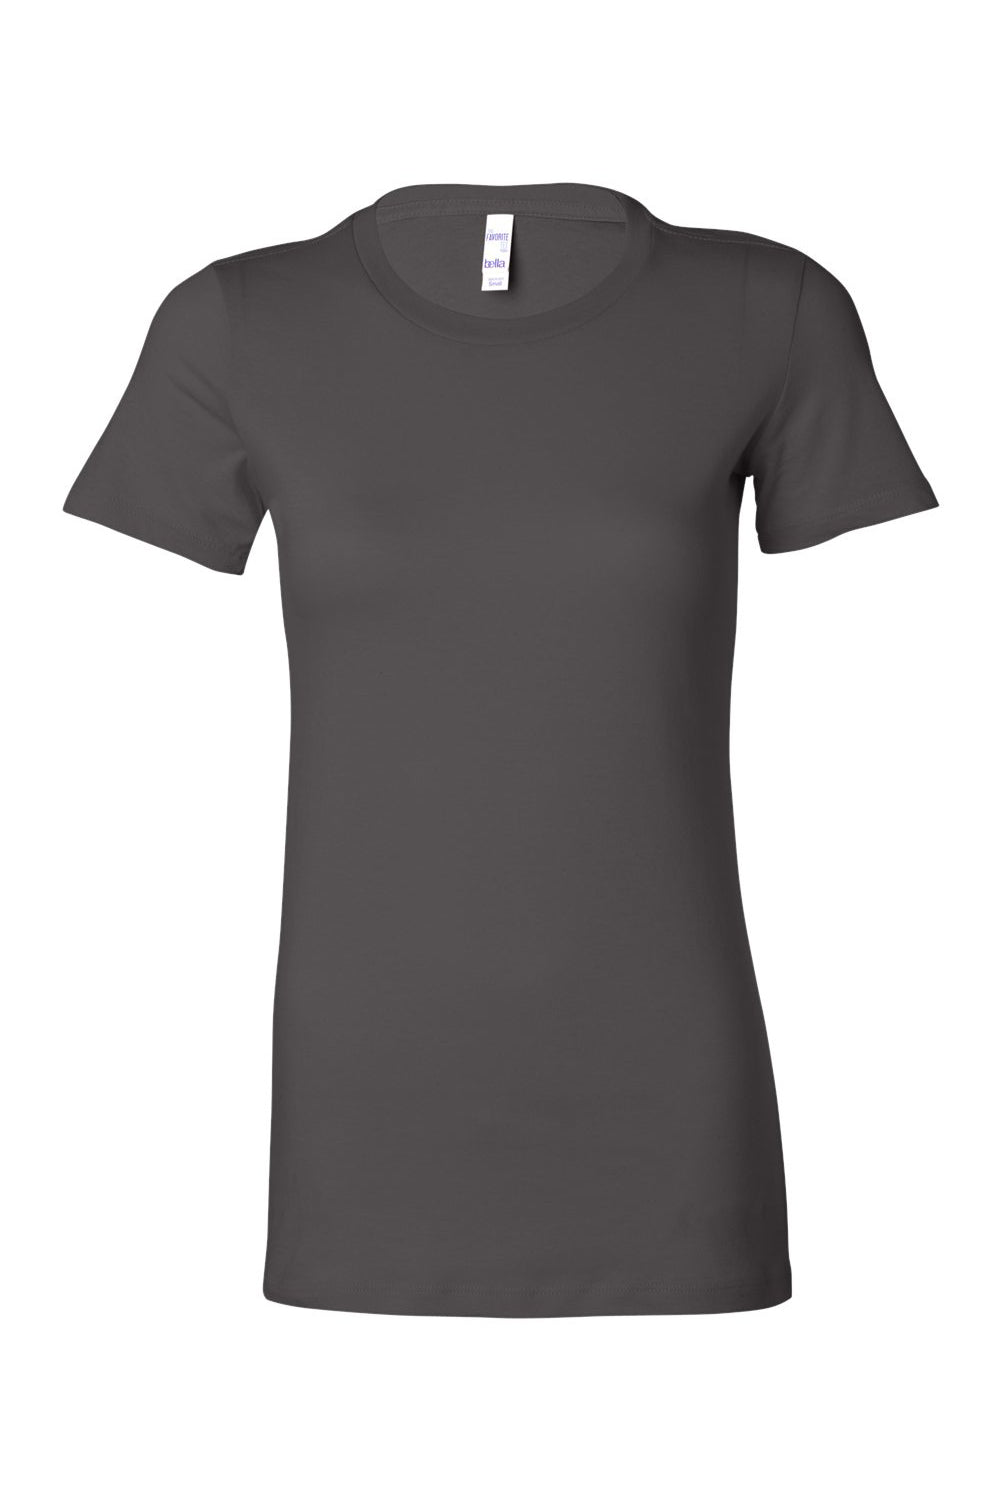 Bella + Canvas BC6004/6004 Womens The Favorite Short Sleeve Crewneck T-Shirt Asphalt Grey Flat Front